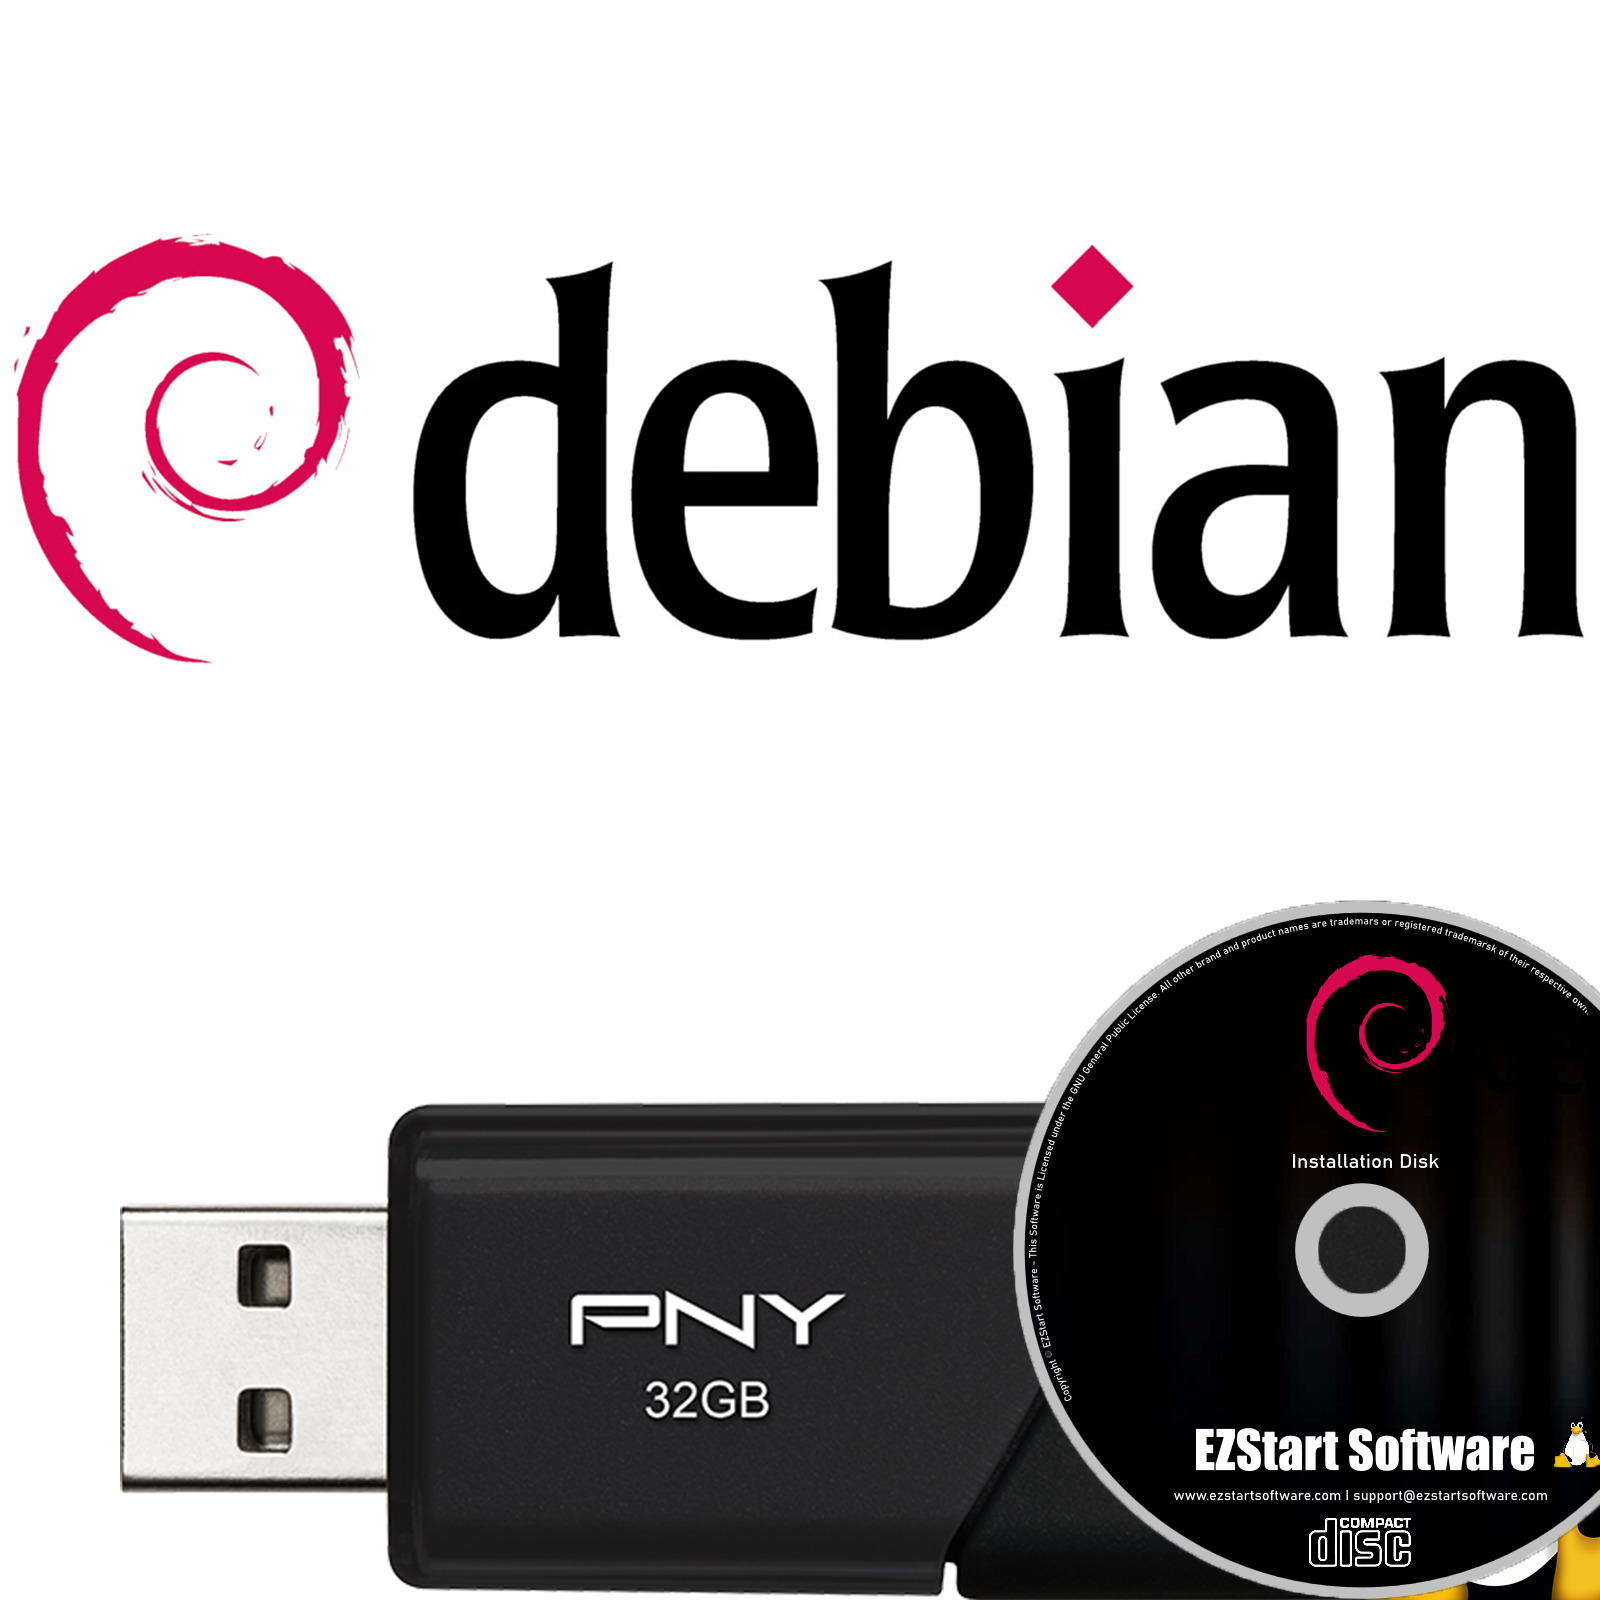 Debian Bootable Live Linux Install on CD/USB